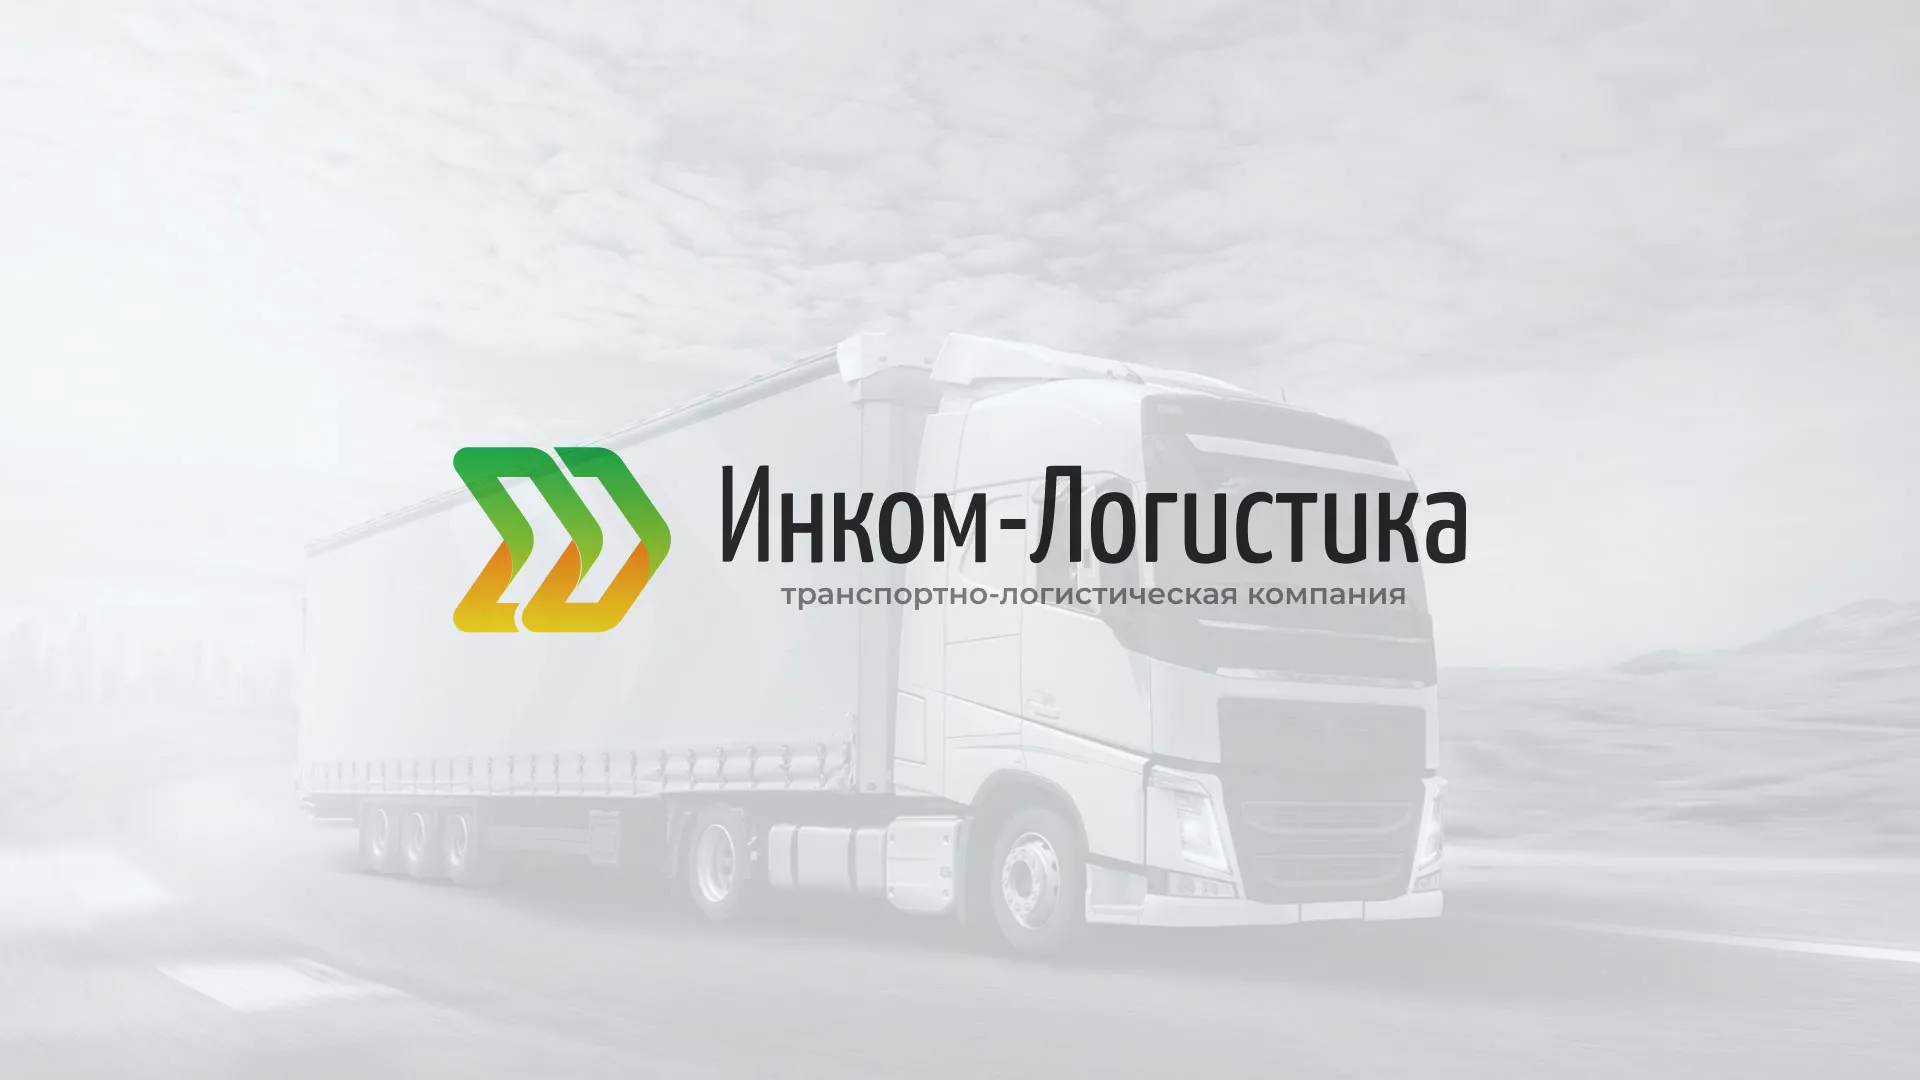 Разработка логотипа и сайта компании «Инком-Логистика» в Удомле